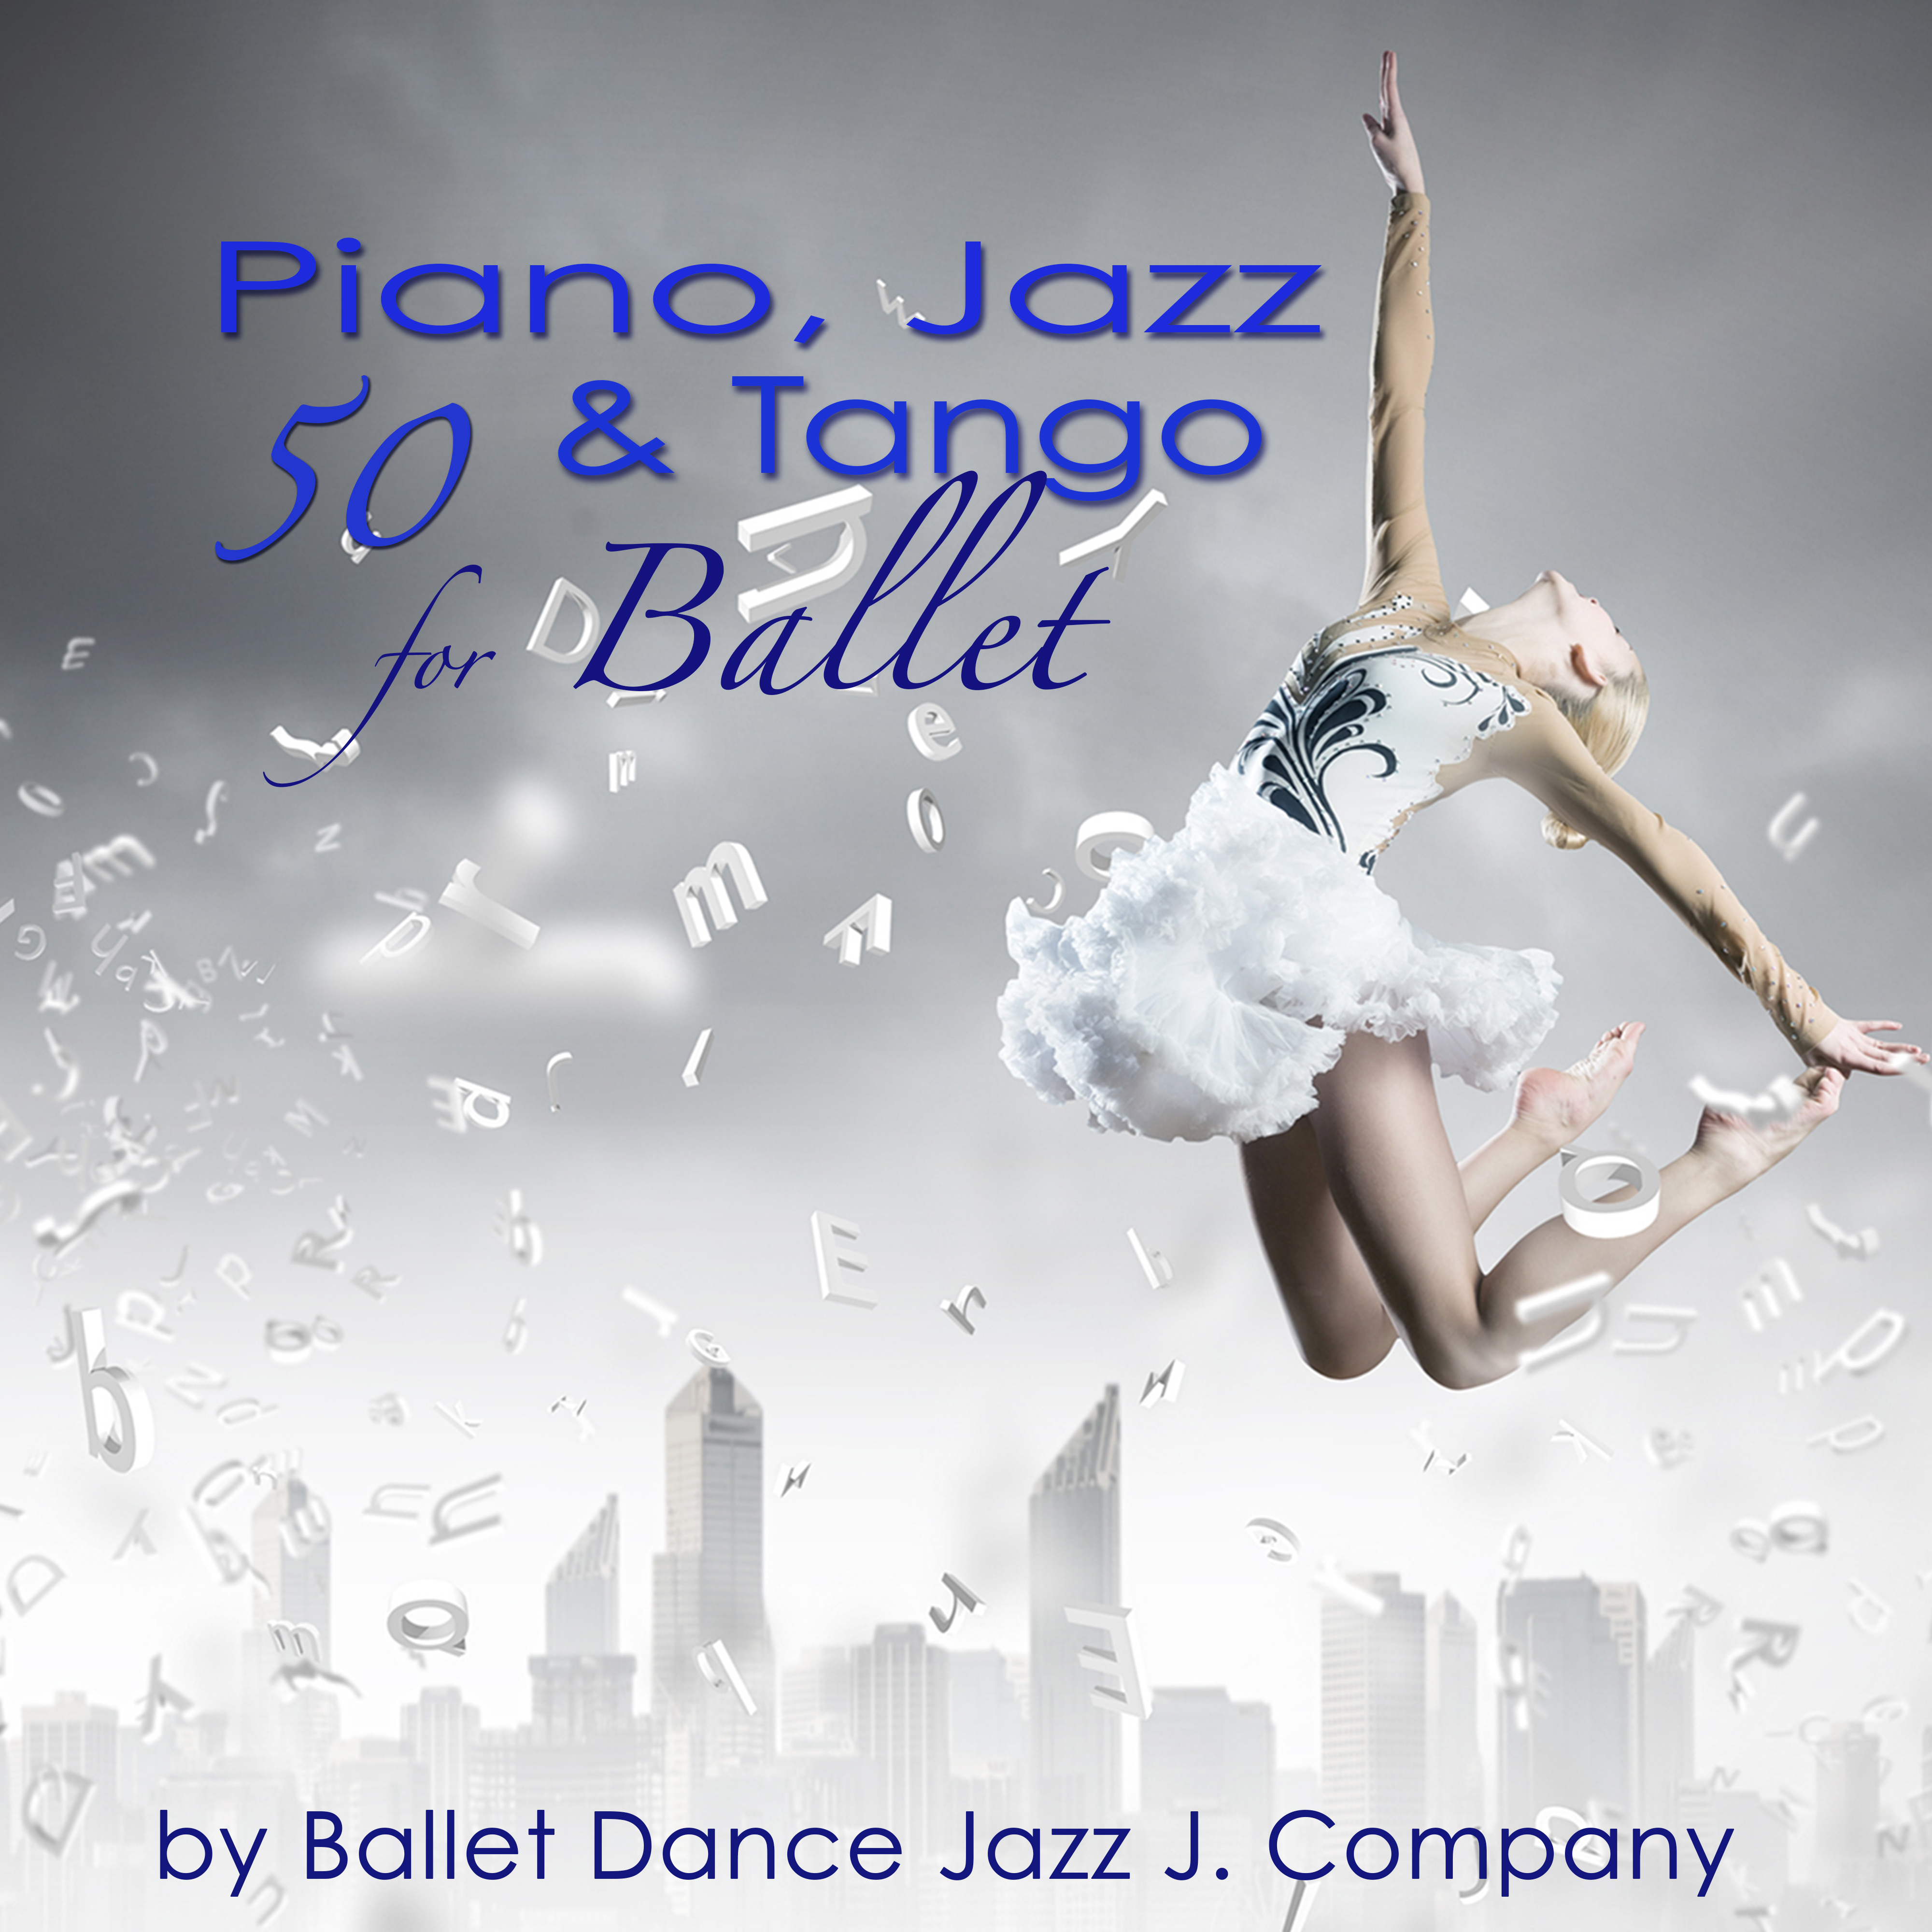 50 Piano, Jazz  Tango for Ballet  Piano Classics  Originals for Ballet Class Music